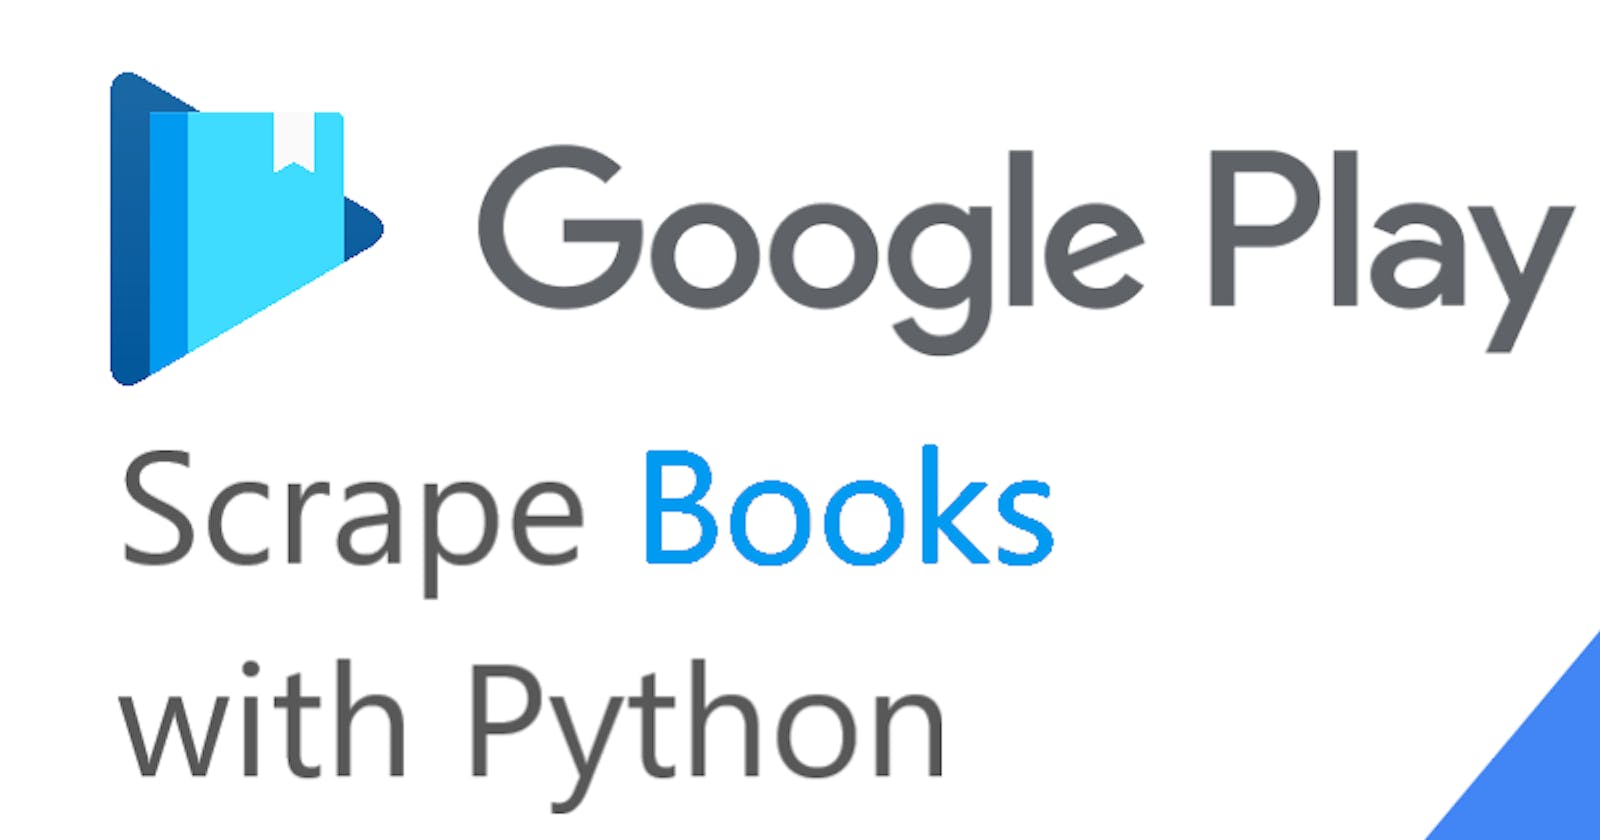 Scrape Google Play Books with Python